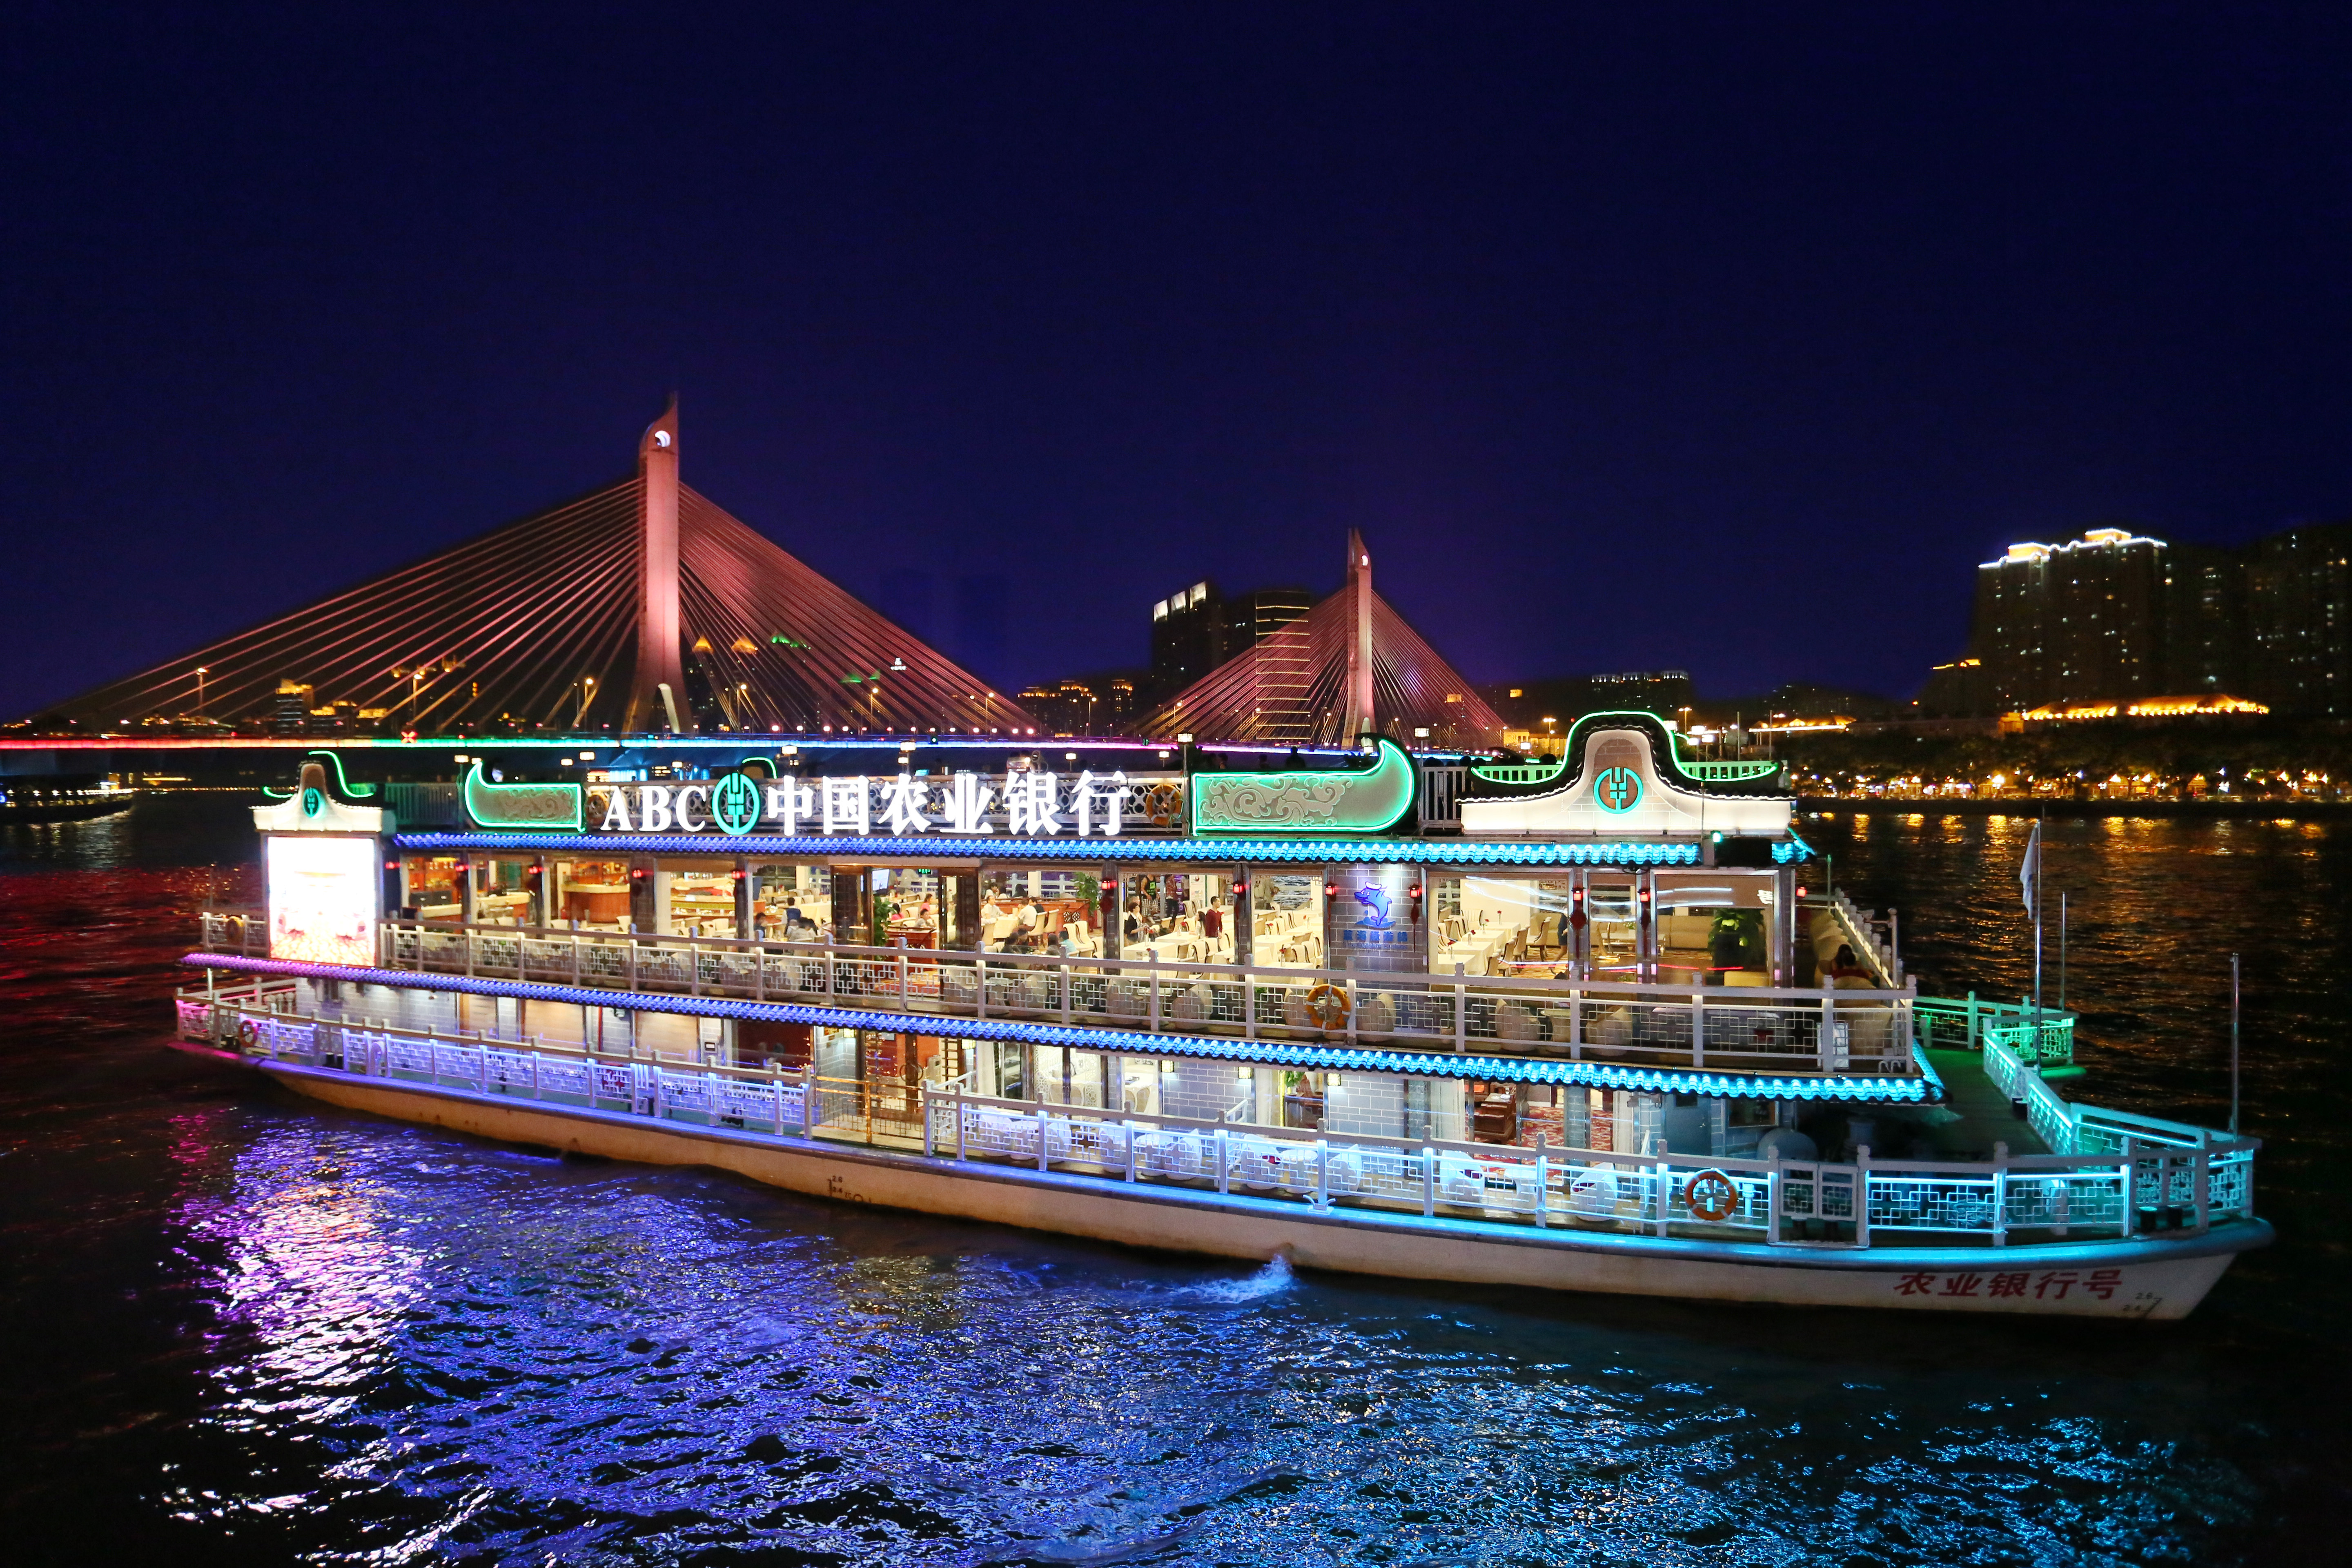 night river cruise